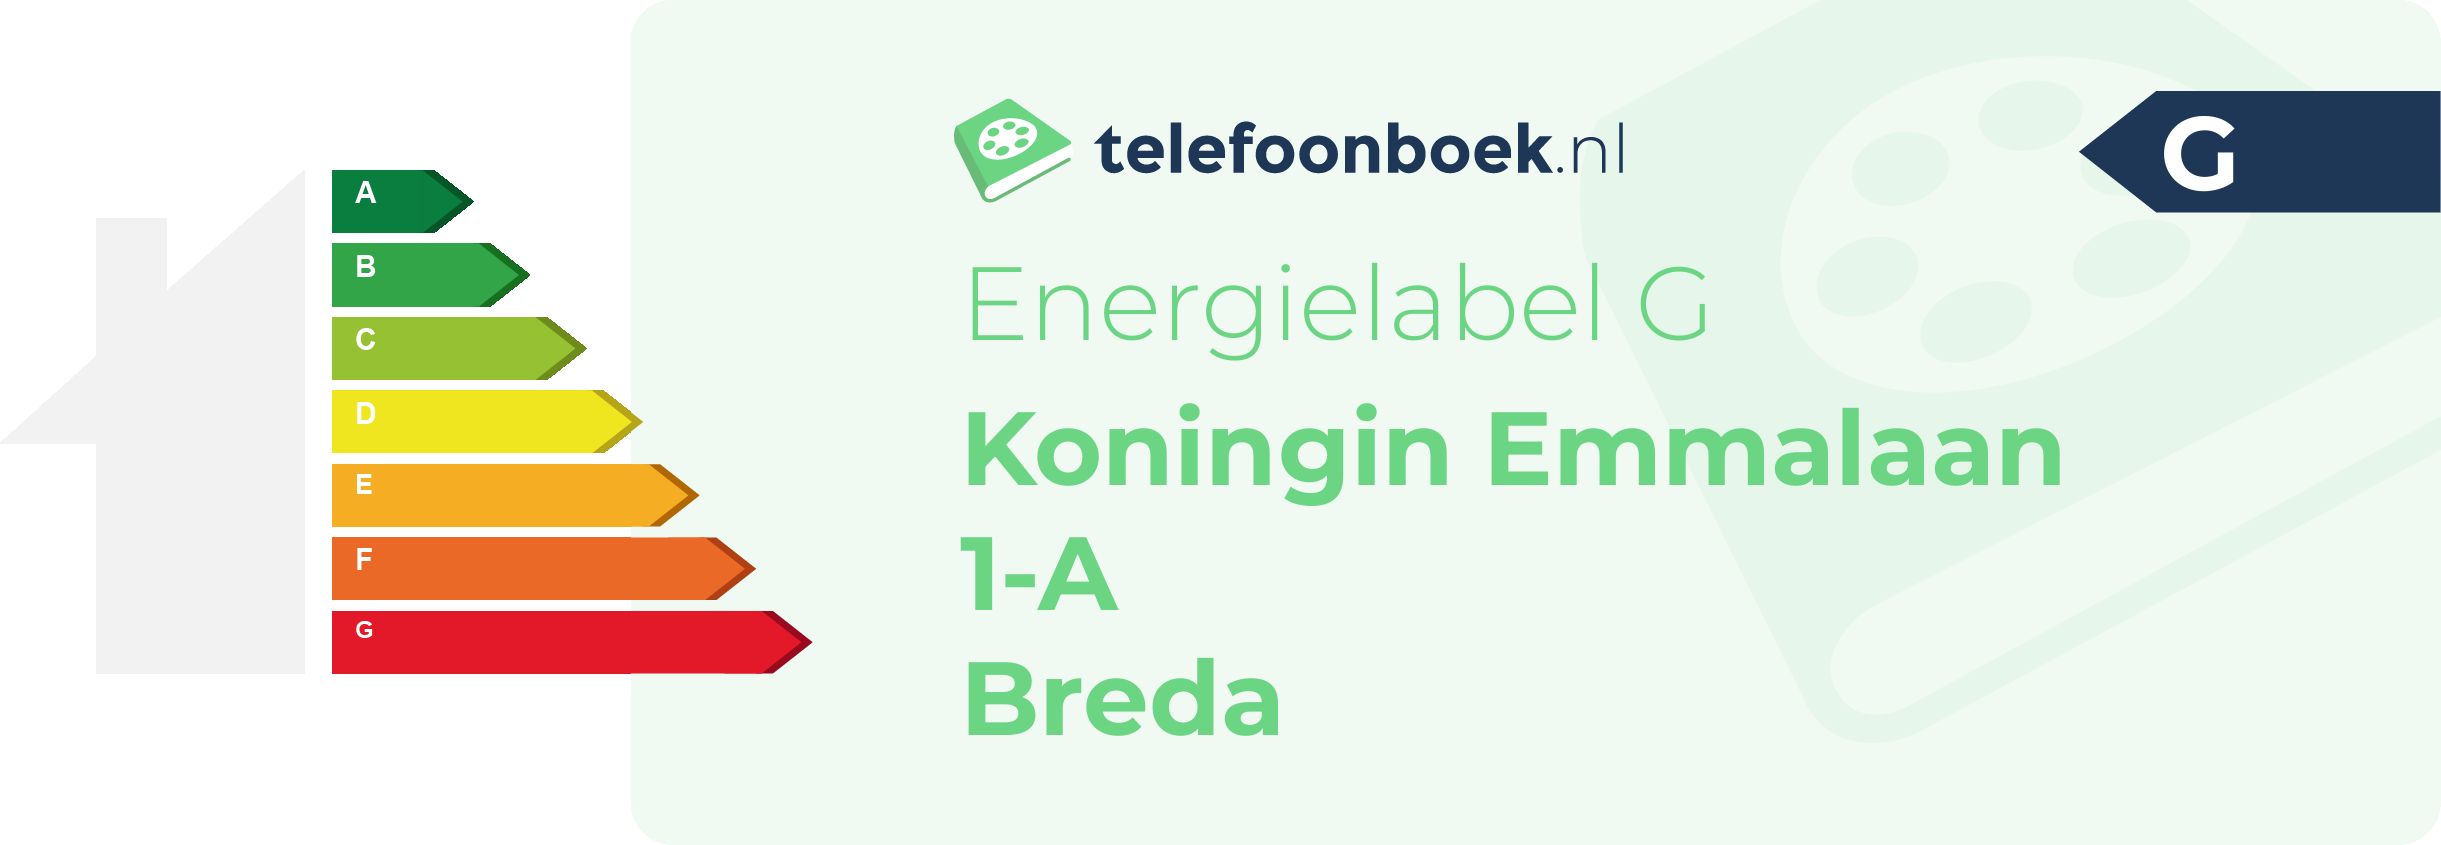 Energielabel Koningin Emmalaan 1-A Breda